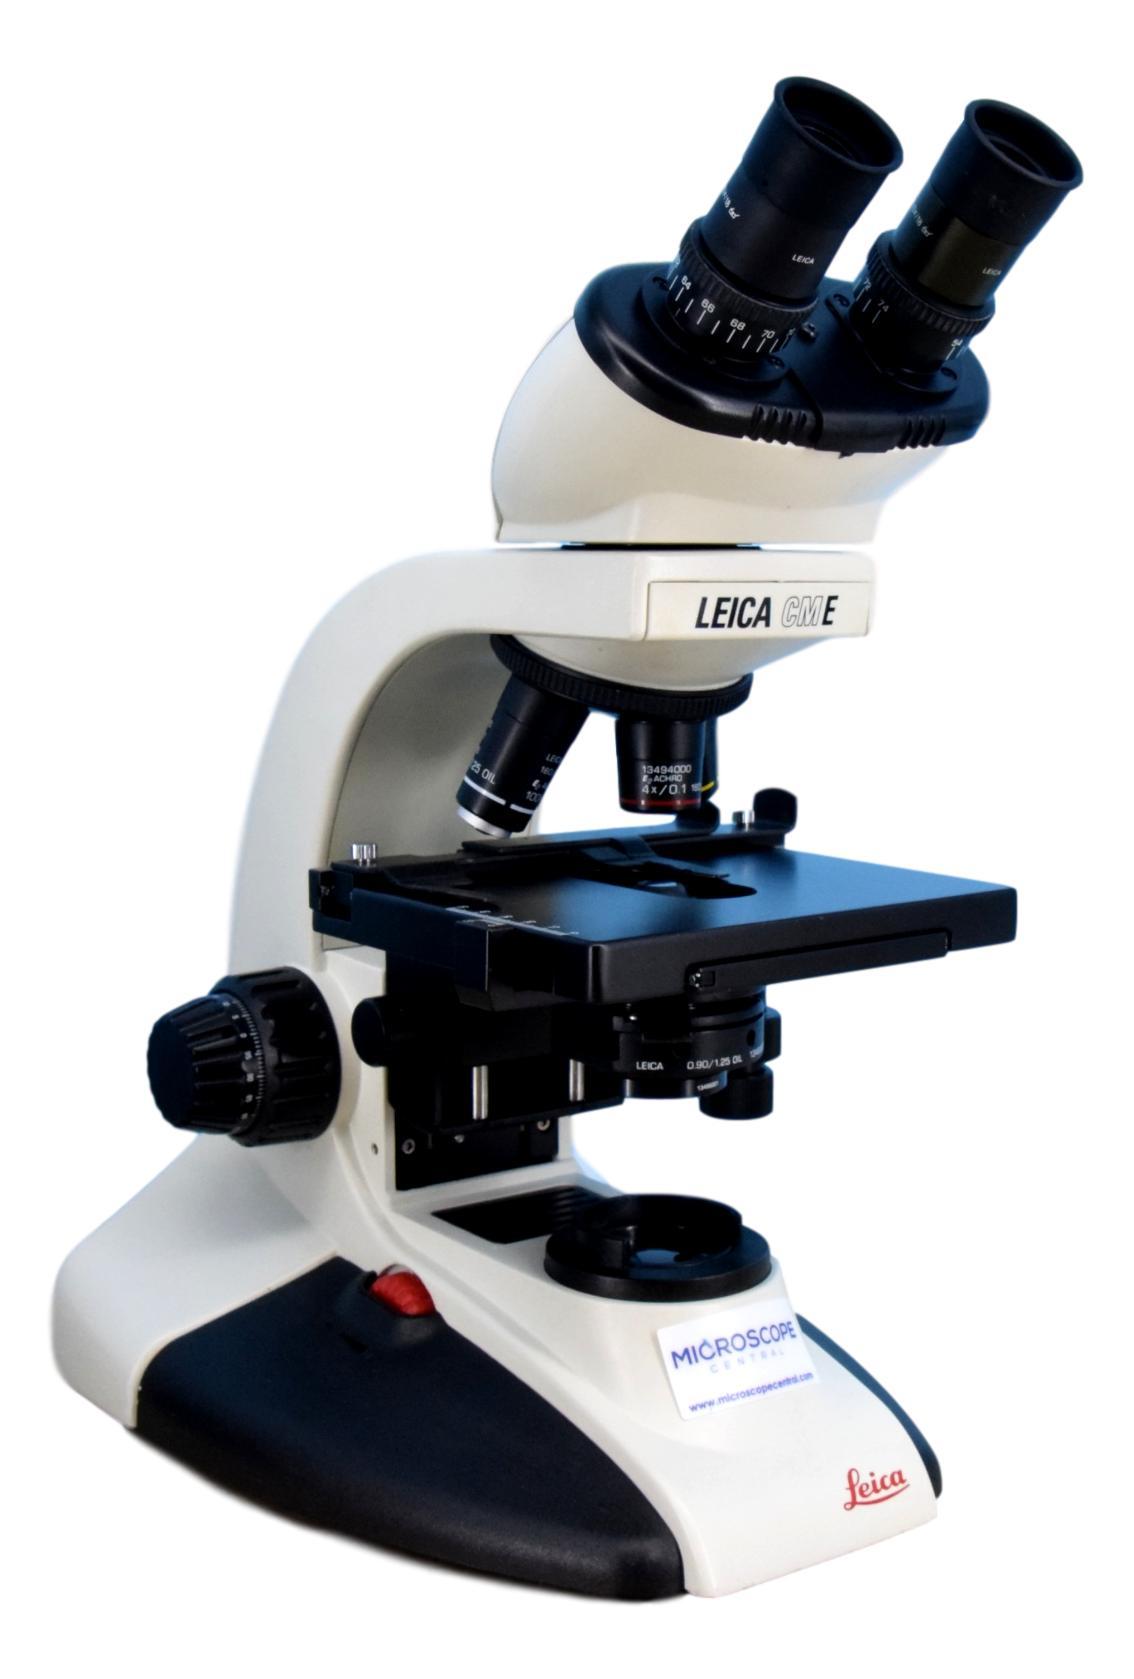 Leica CME Binocular Microscope